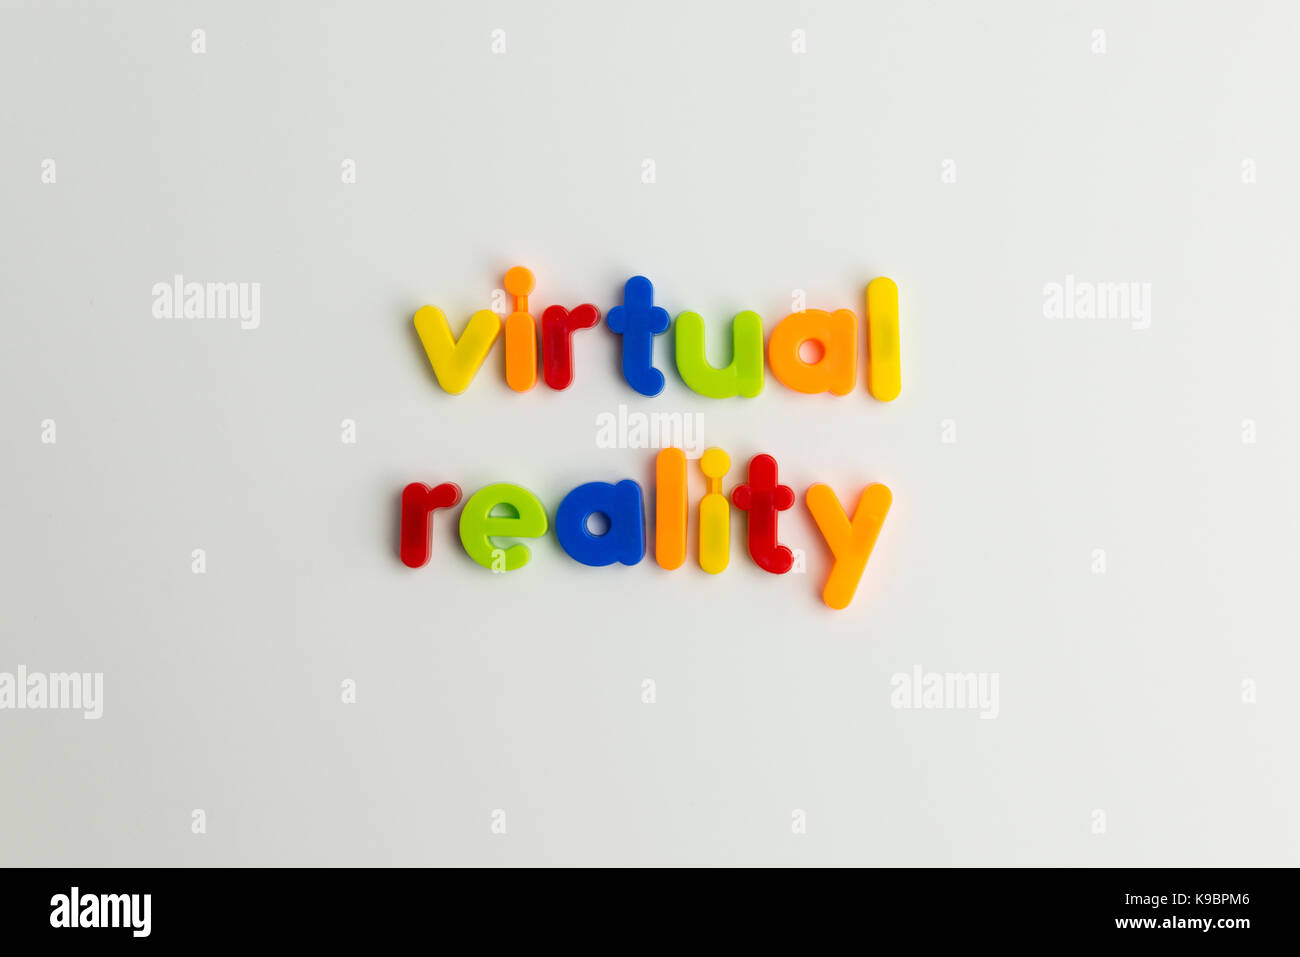 virtual reality words